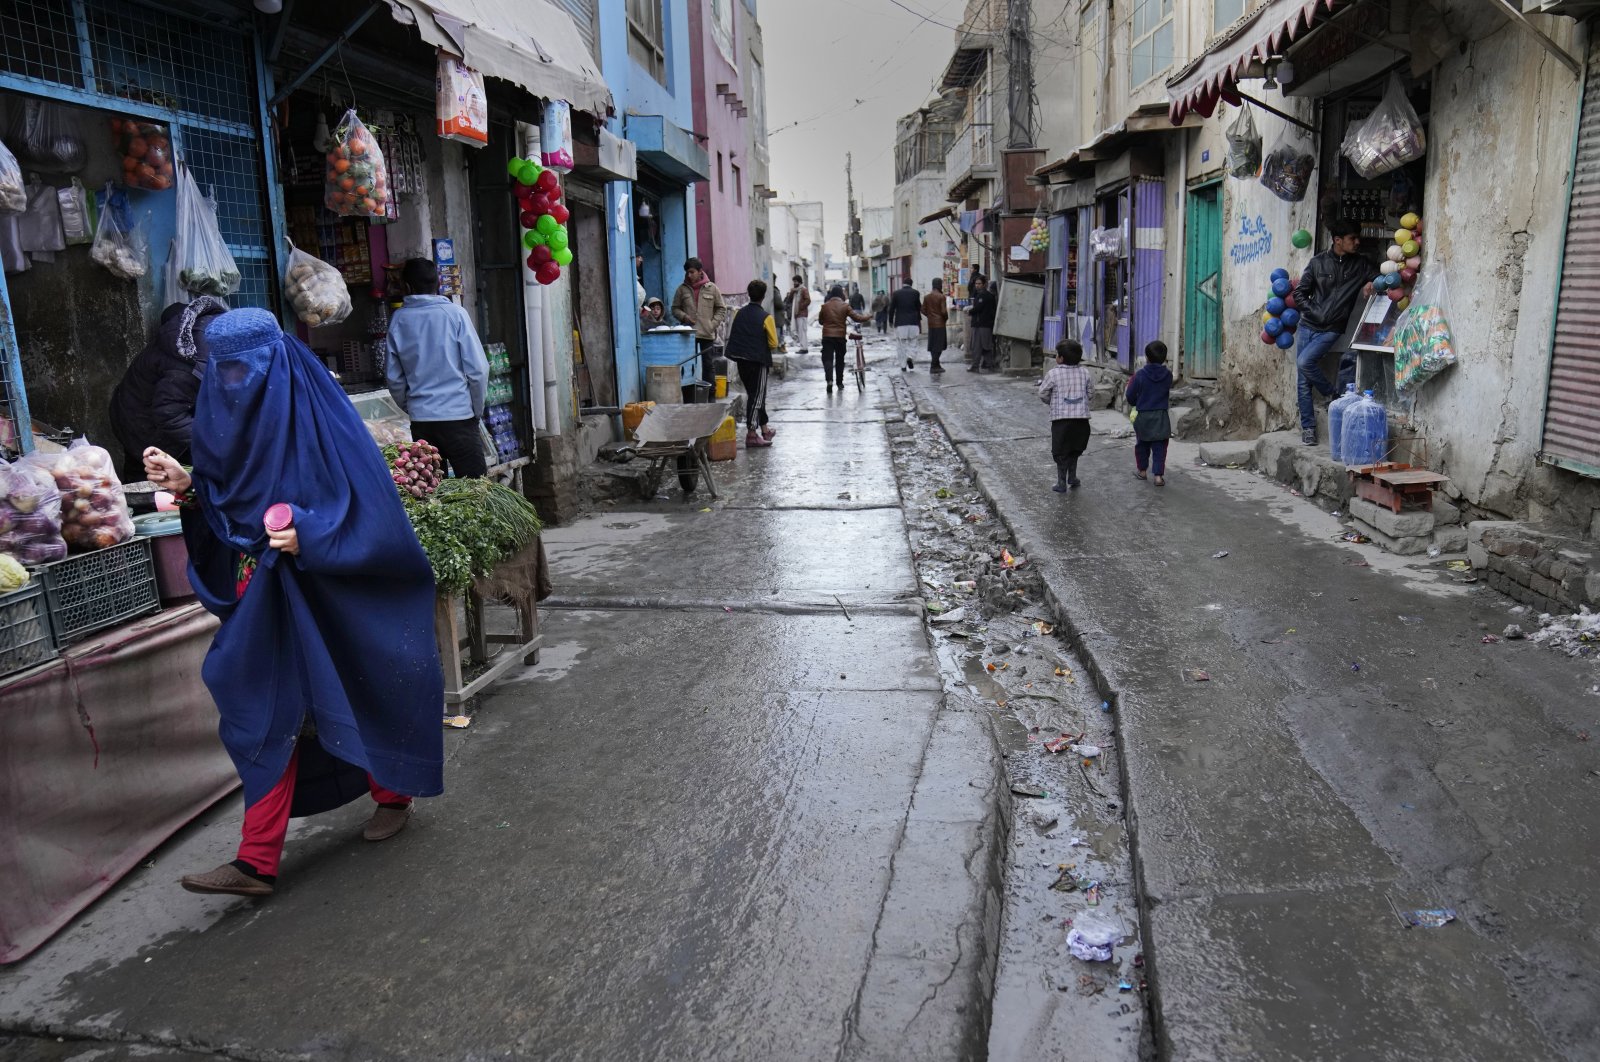 People shop in a market street, in Kabul, Afghanistan, Feb. 8, 2022. (AP Photo)